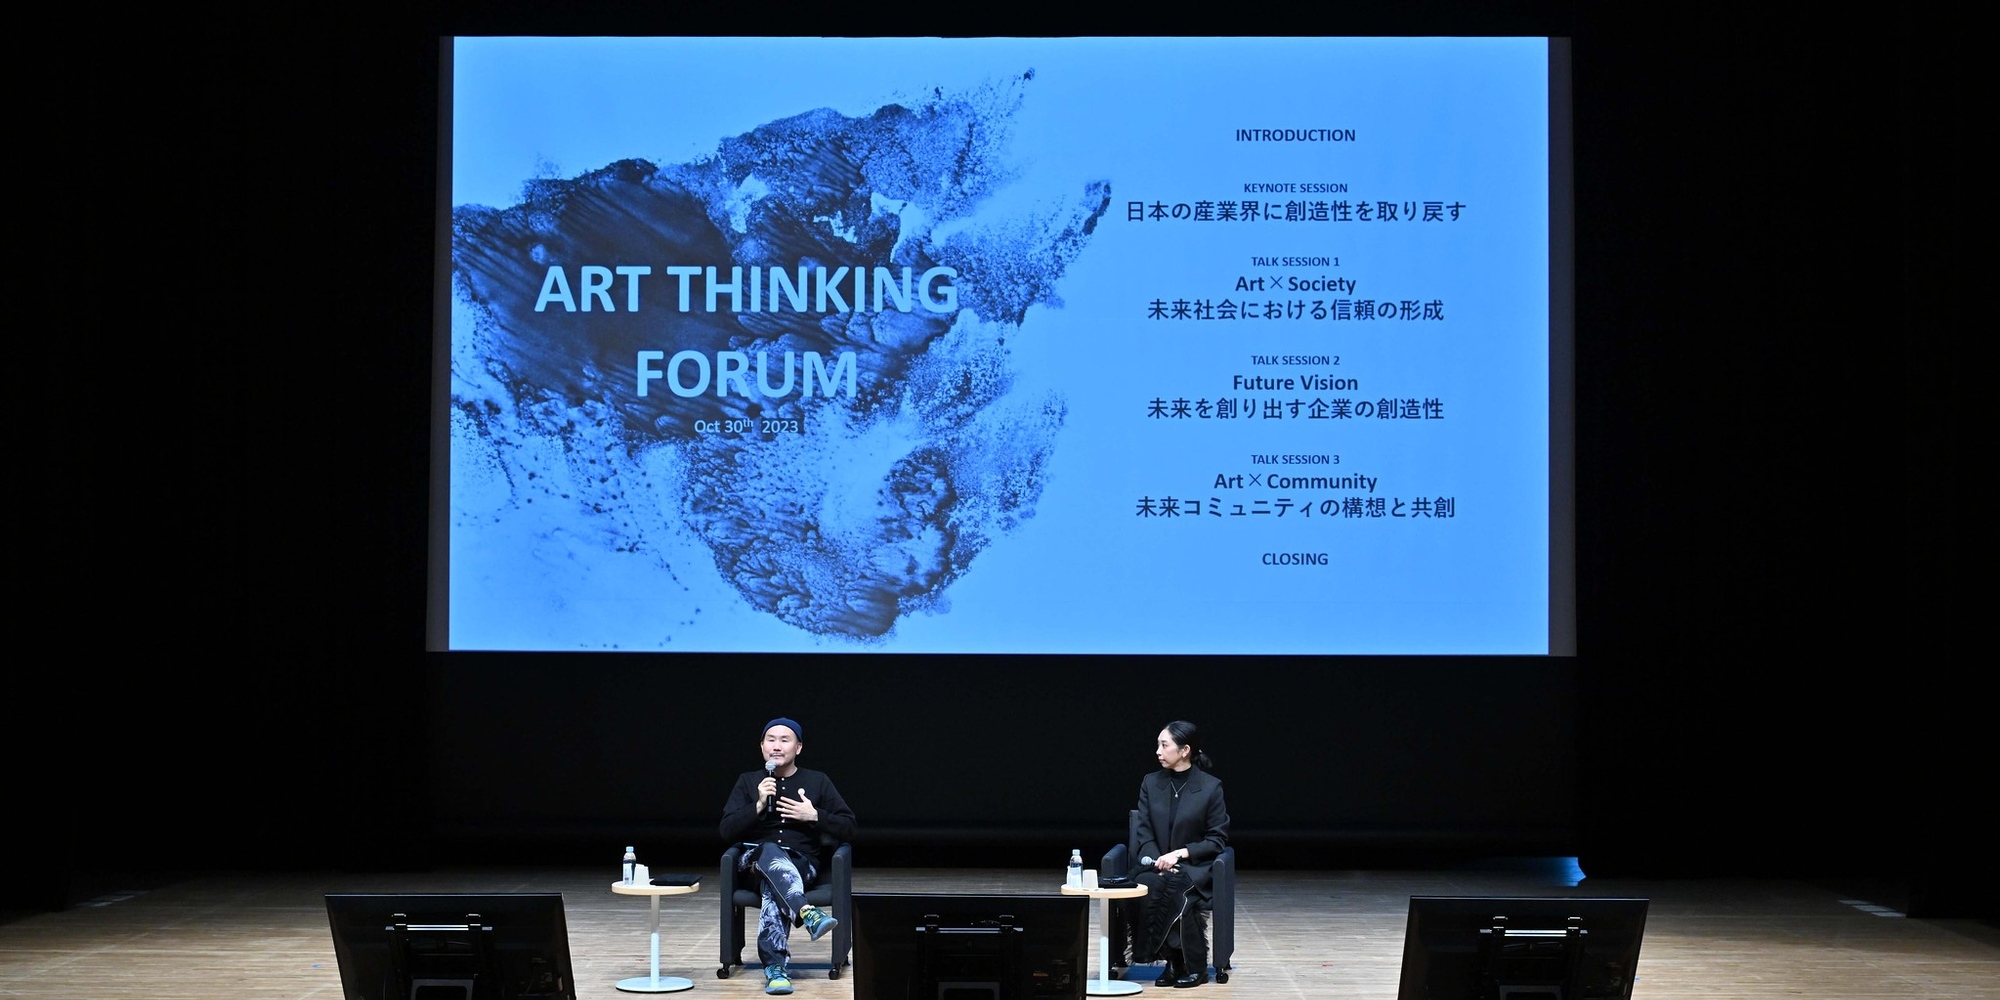 Art Thinking Forum 2023: Introduction